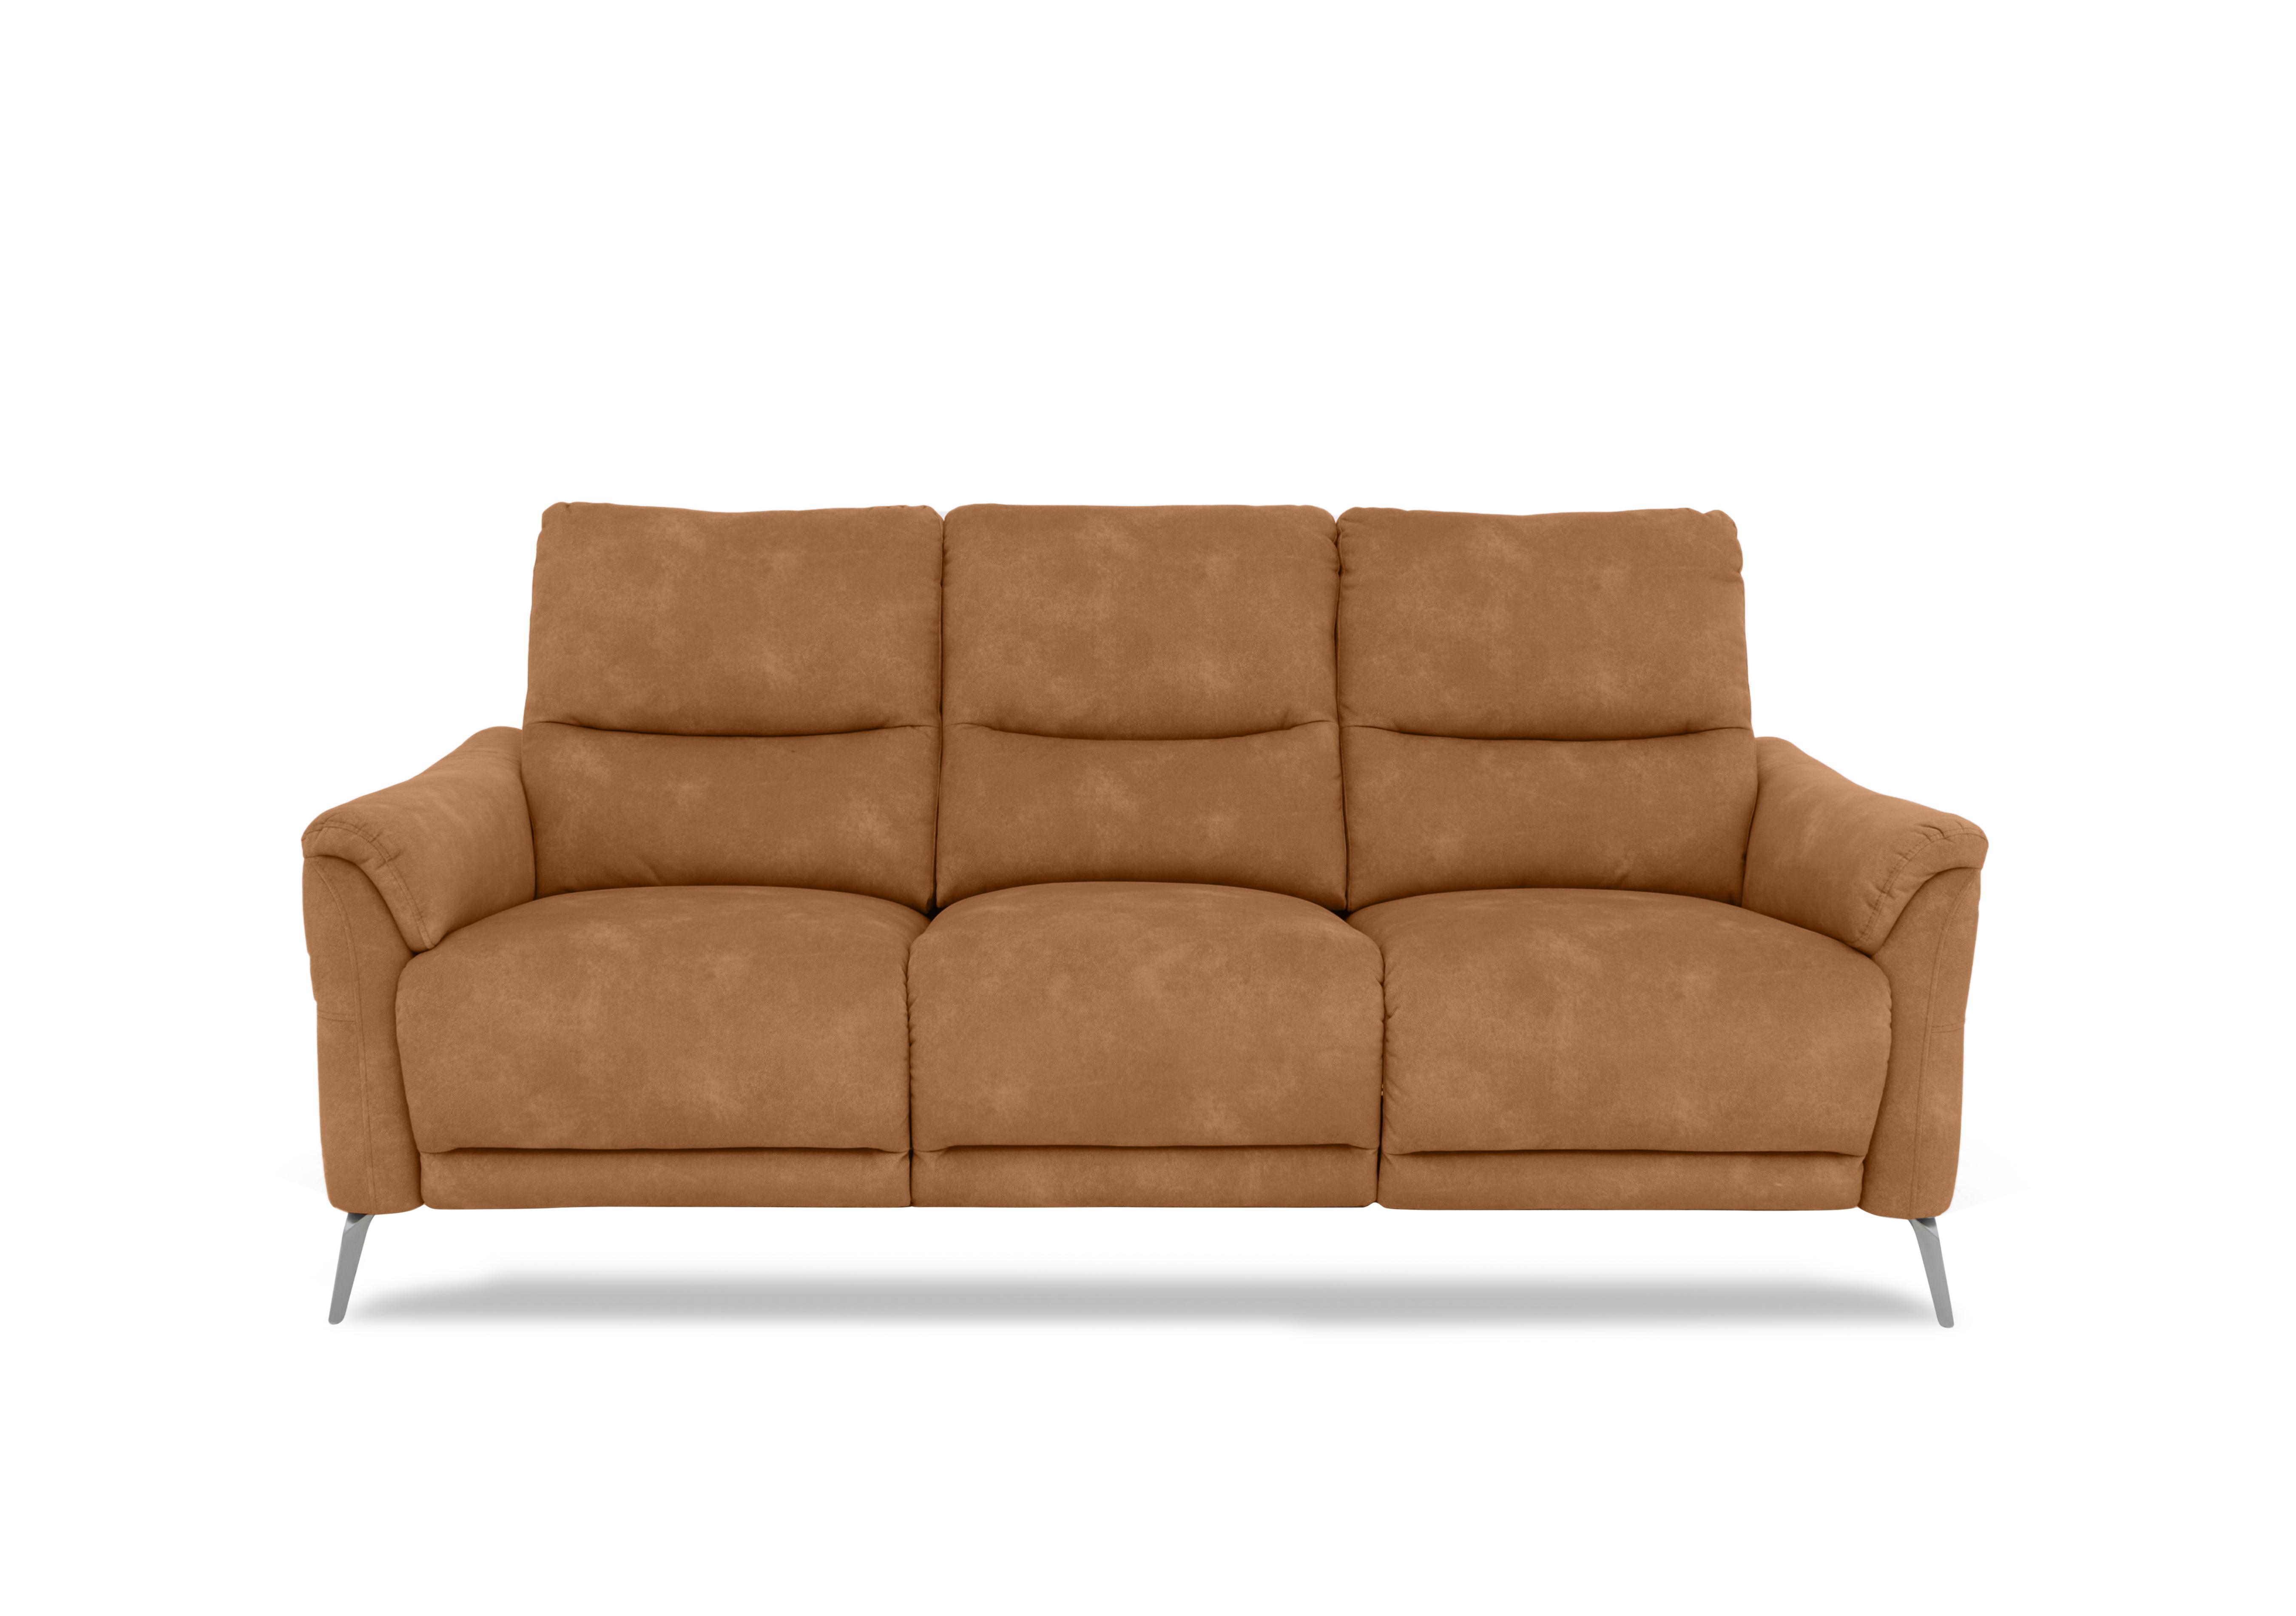 Daytona 3 Seater Fabric Power Recliner Sofa with Drop Down in 43509 Dexter Pumpkin on Furniture Village